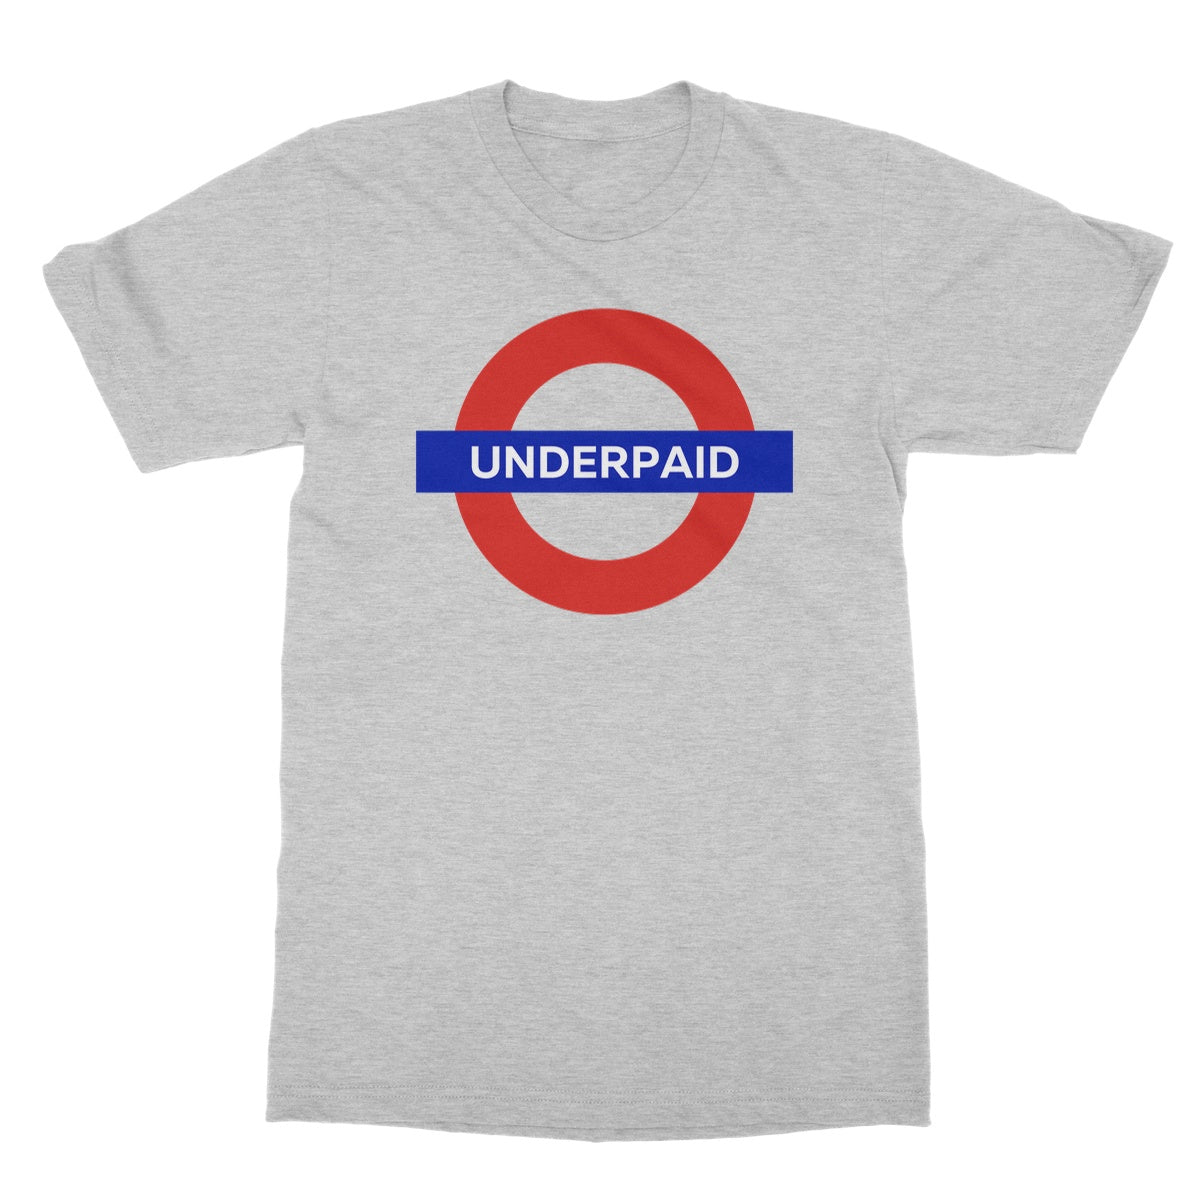 underpaid t shirt grey